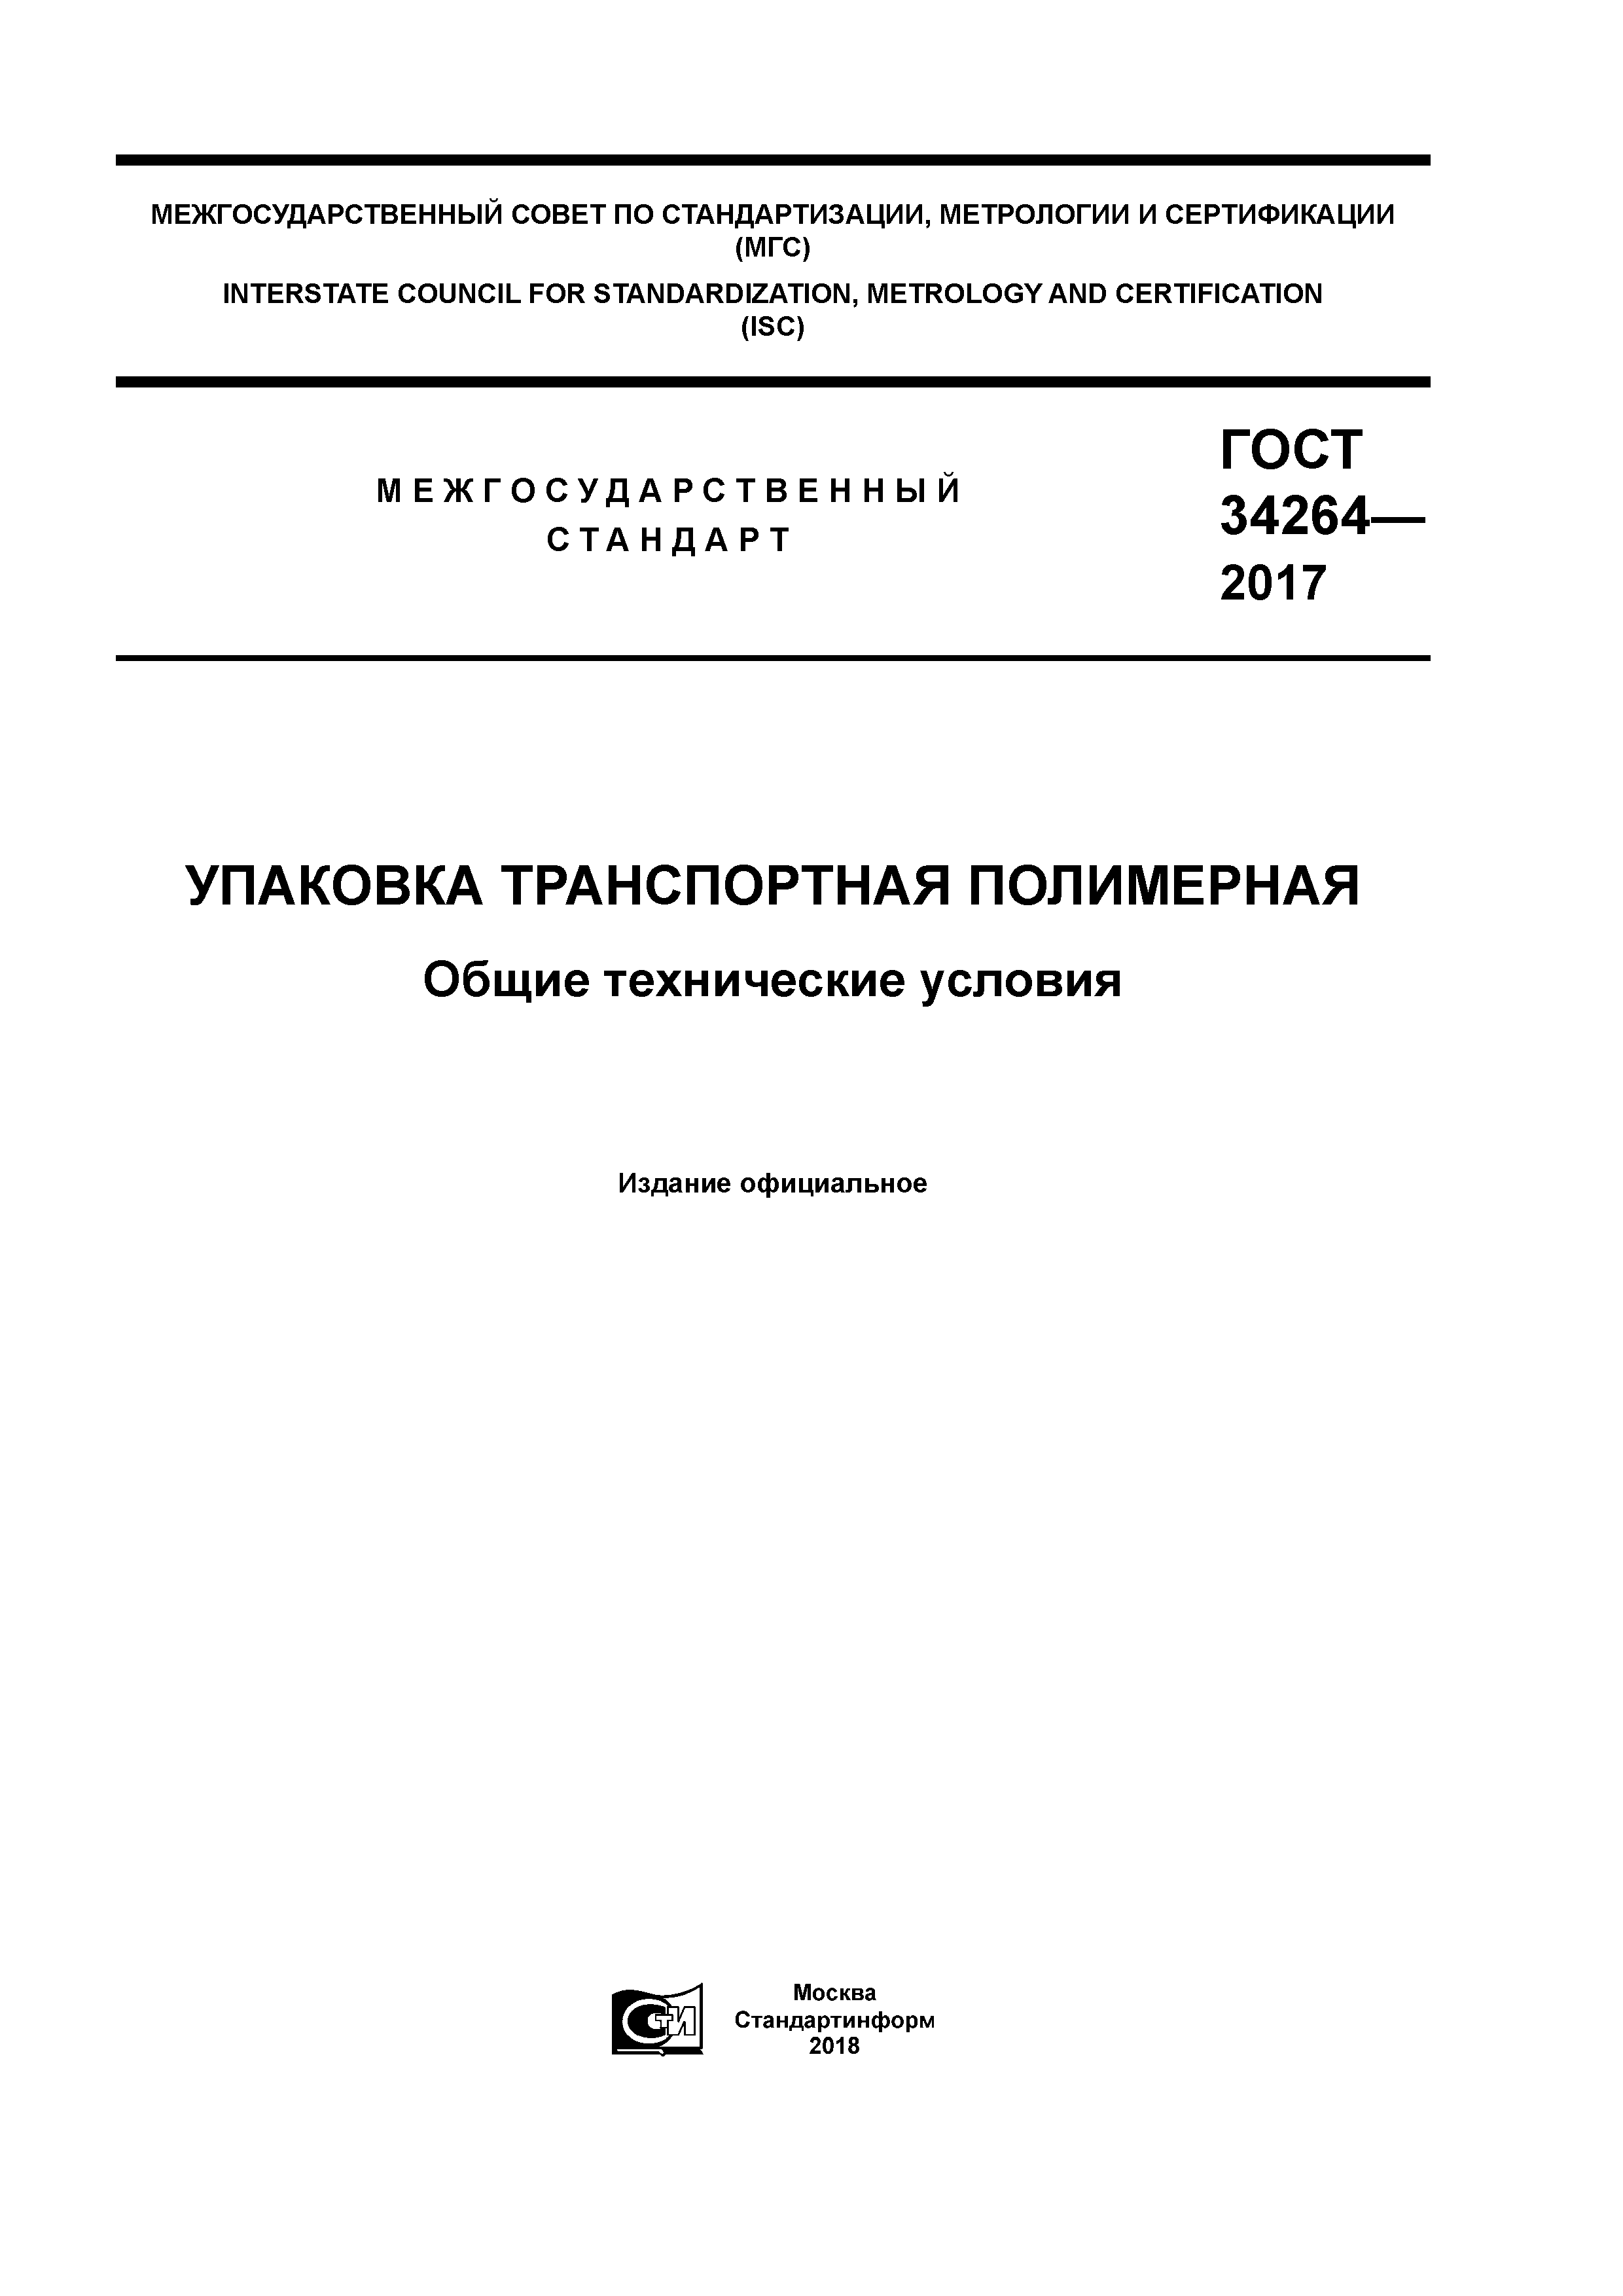 ГОСТ 34264-2017